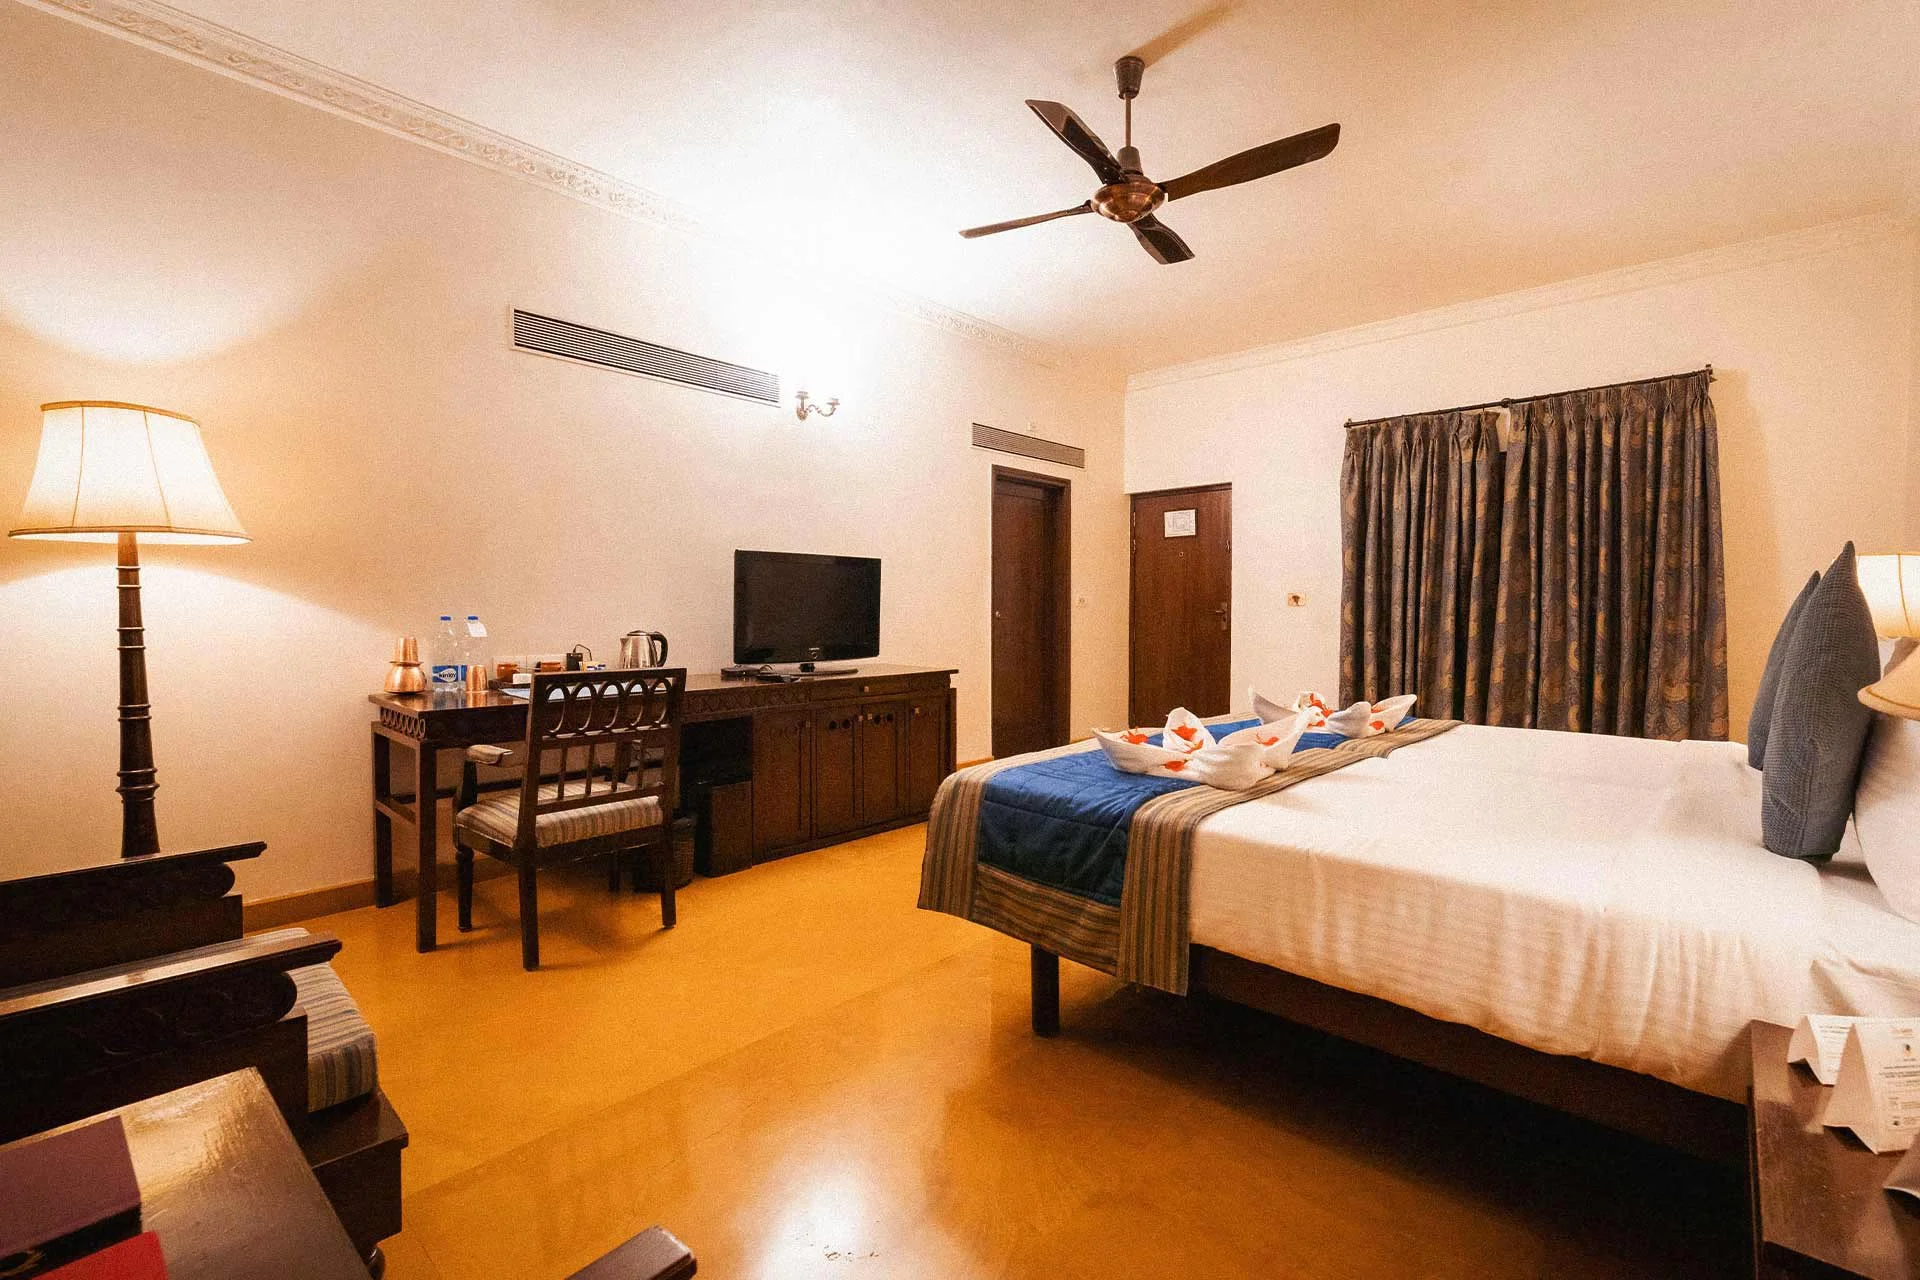 Luxurious Kholi Room at Fort JadhavGADH Resort near Pune